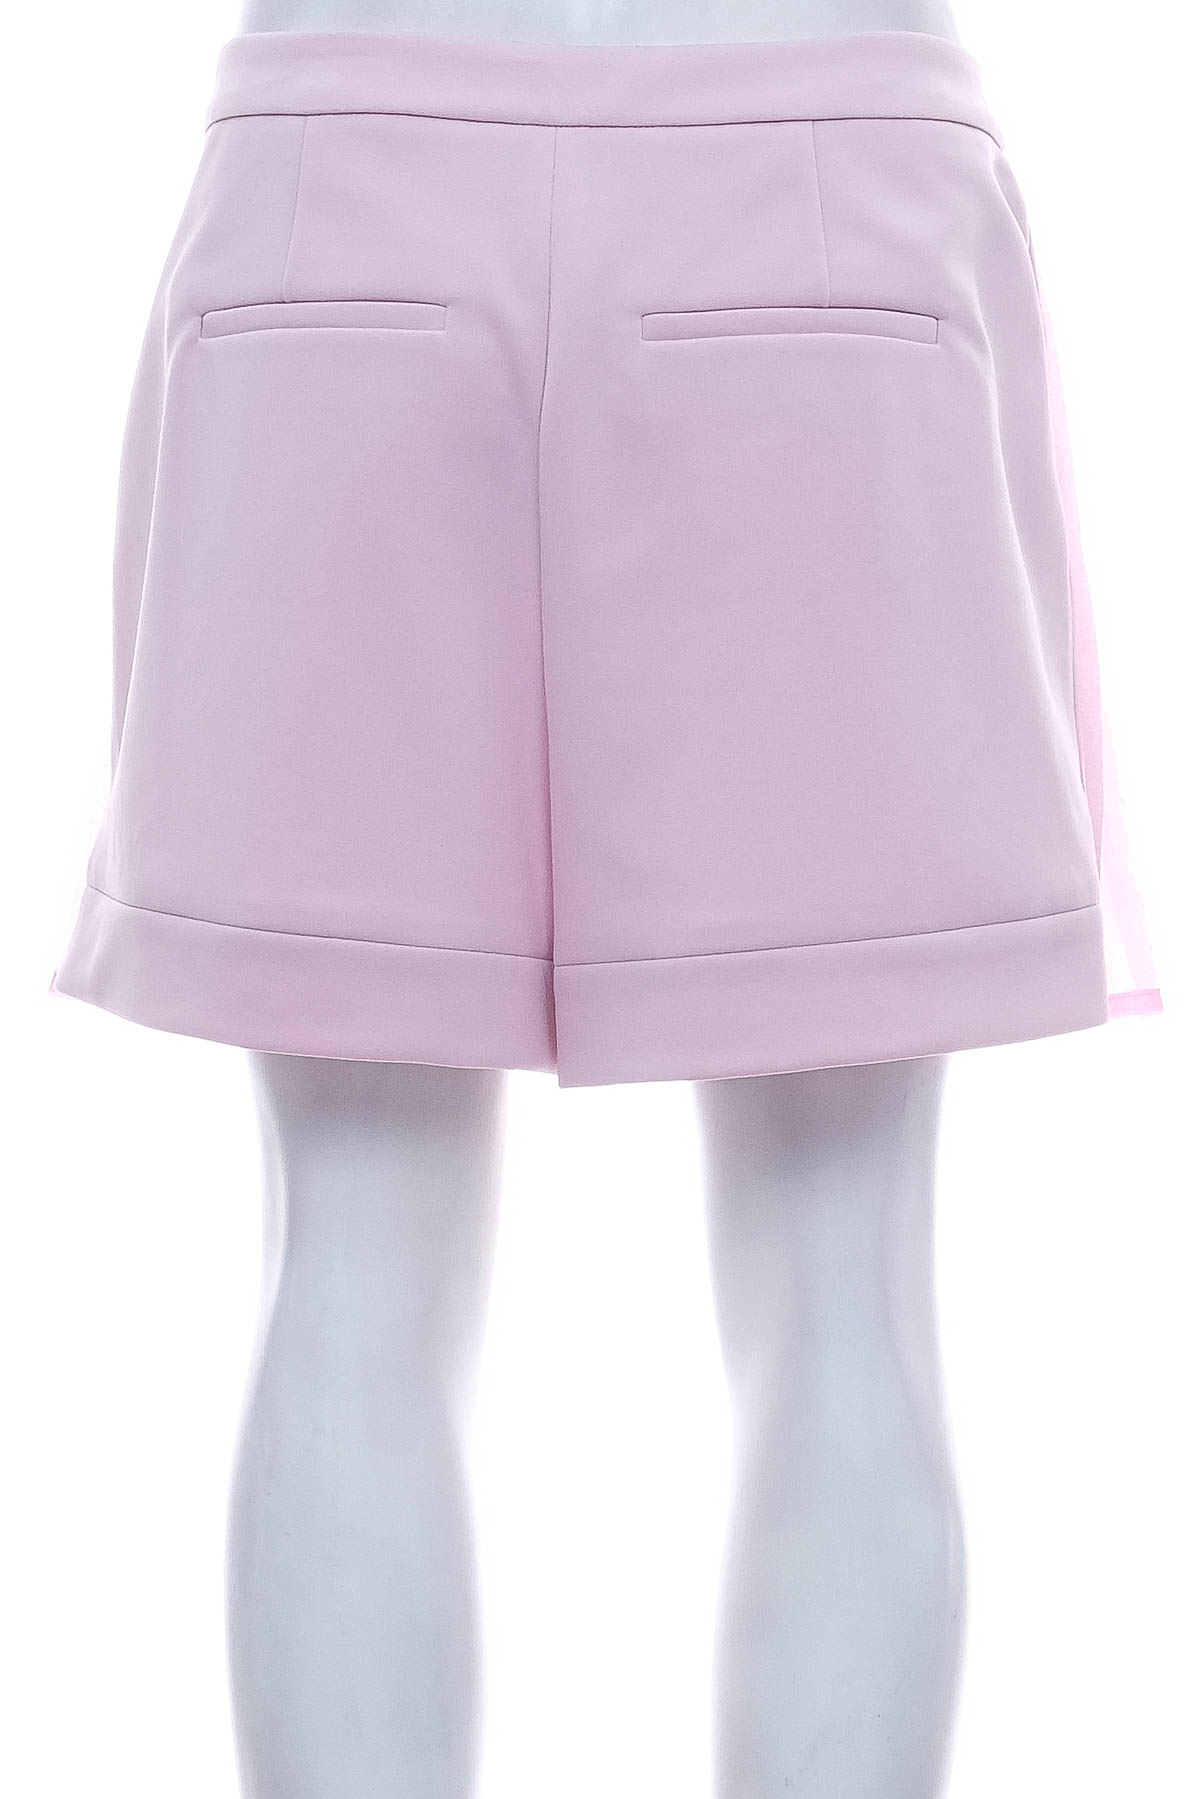 Female shorts - Sonia By Sonia Rykiel - 1